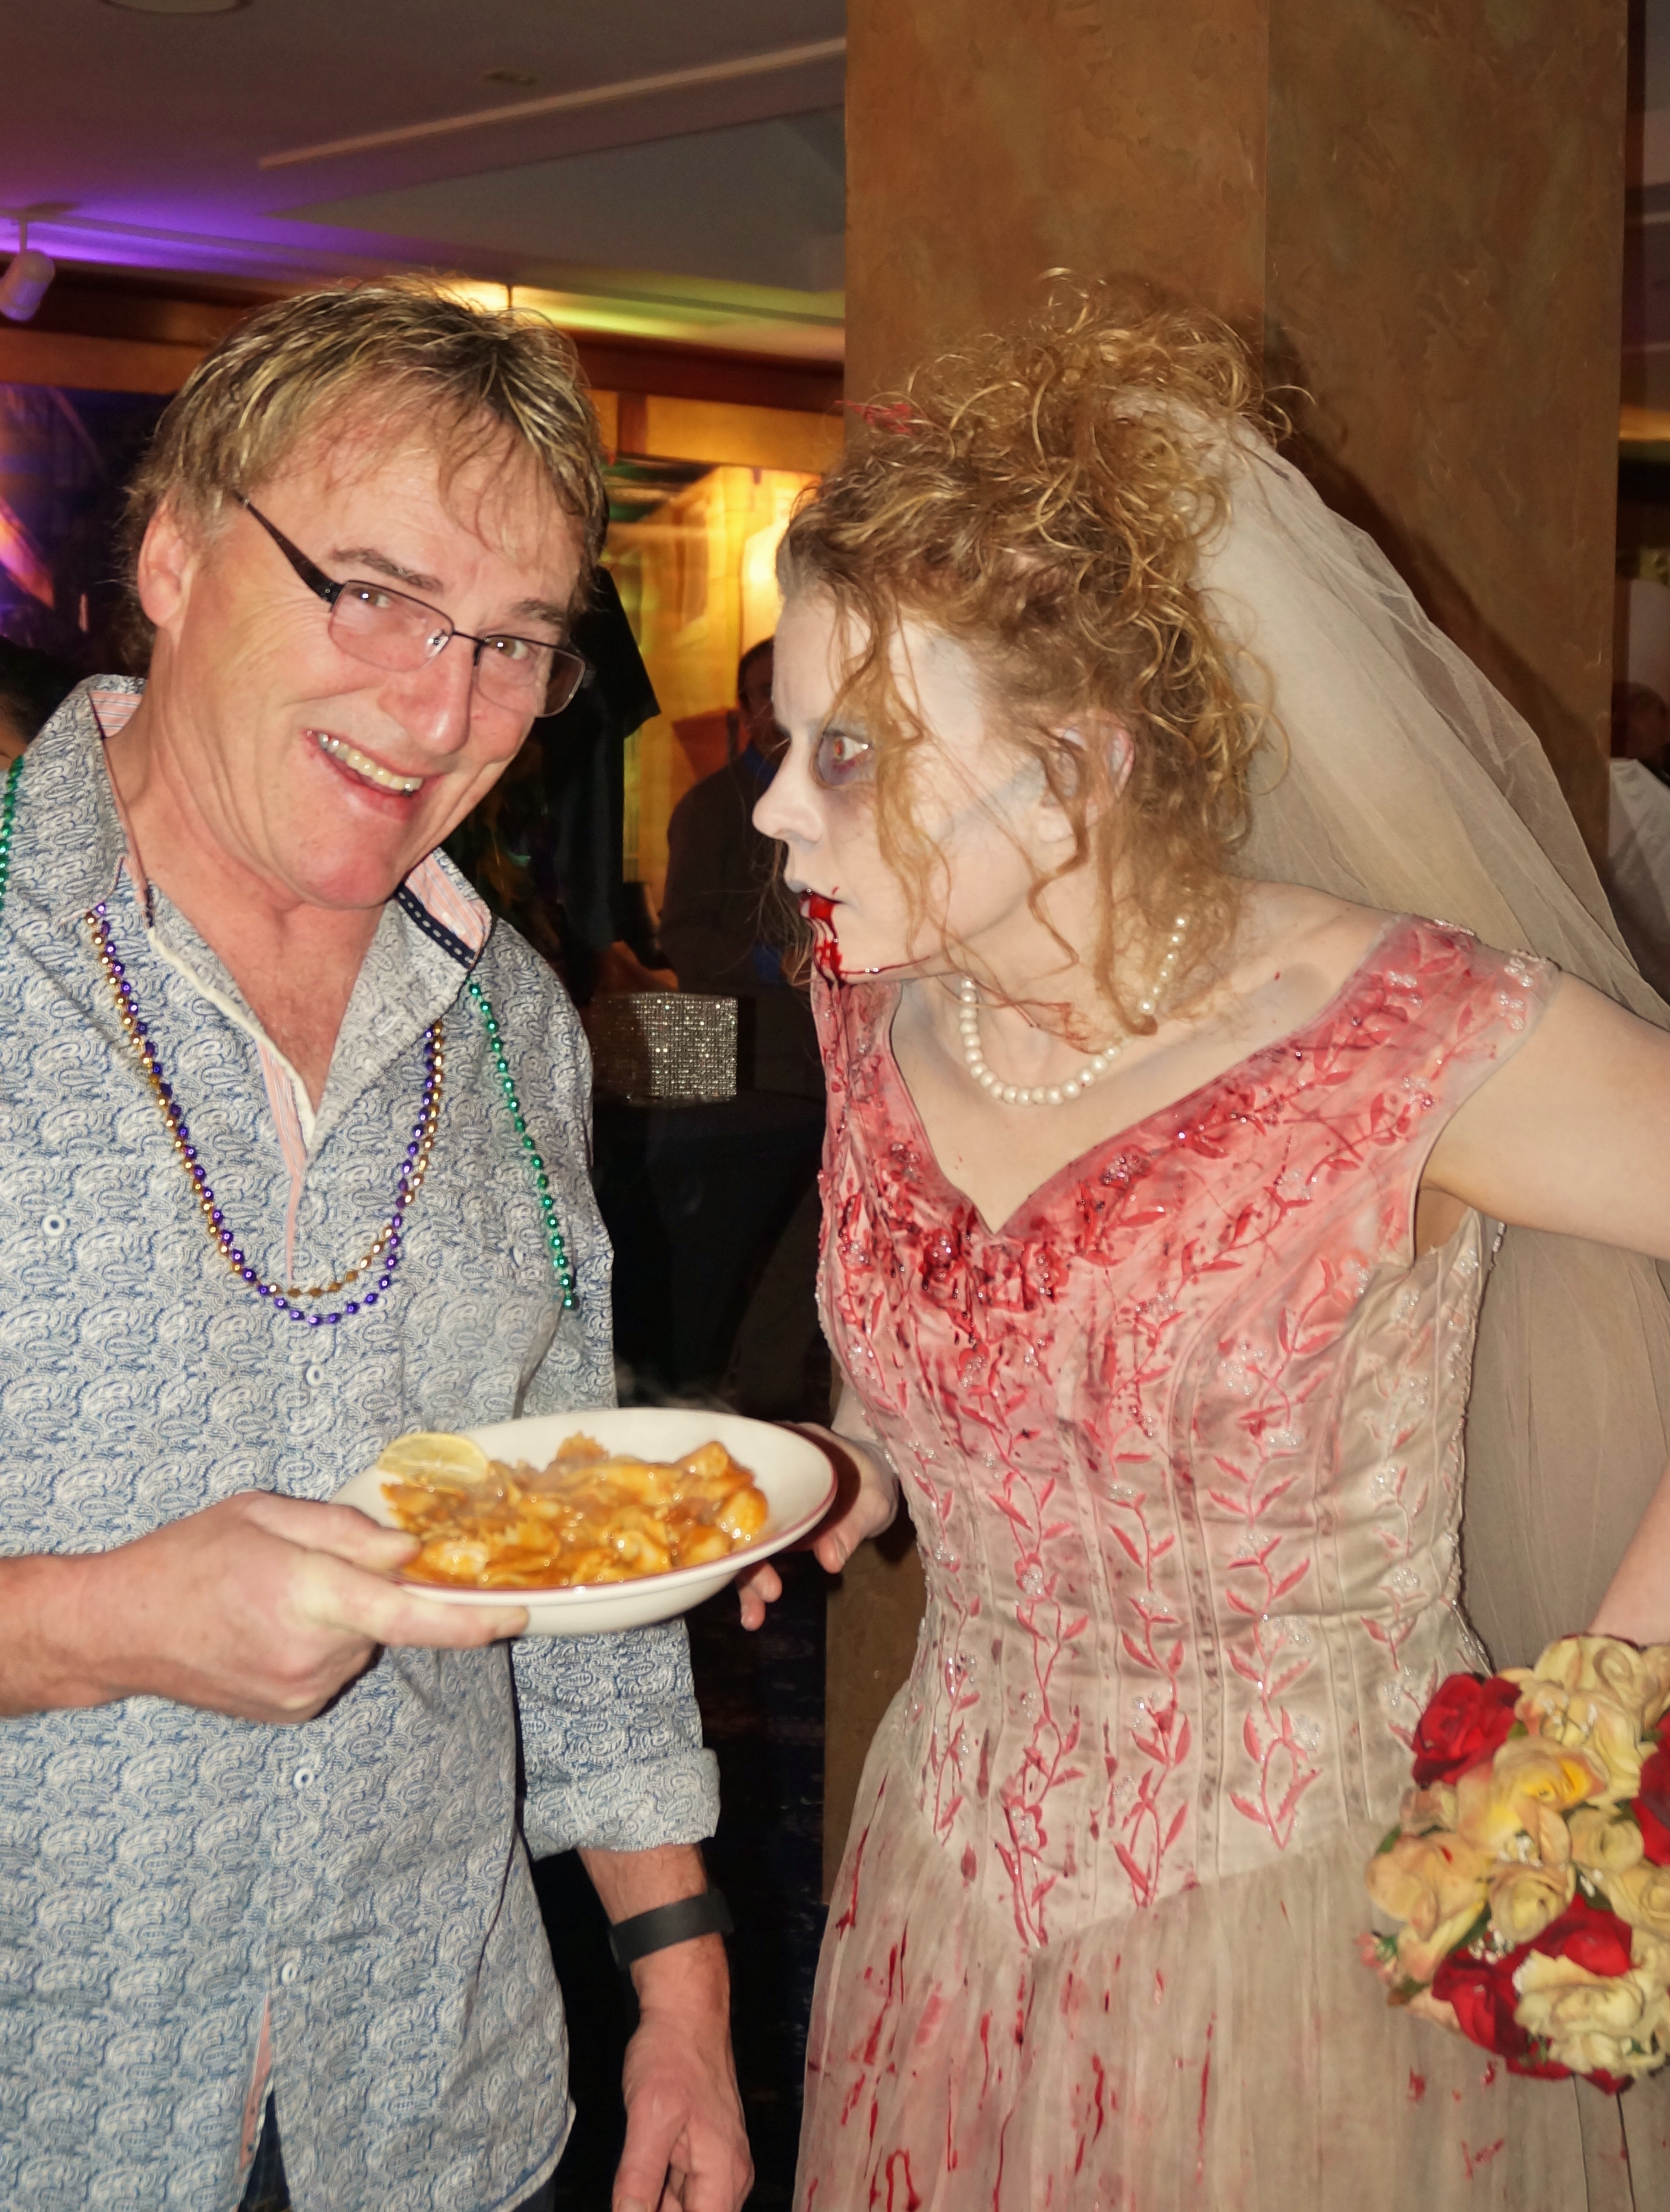 Tom McGouran and the Zombie Bride 2